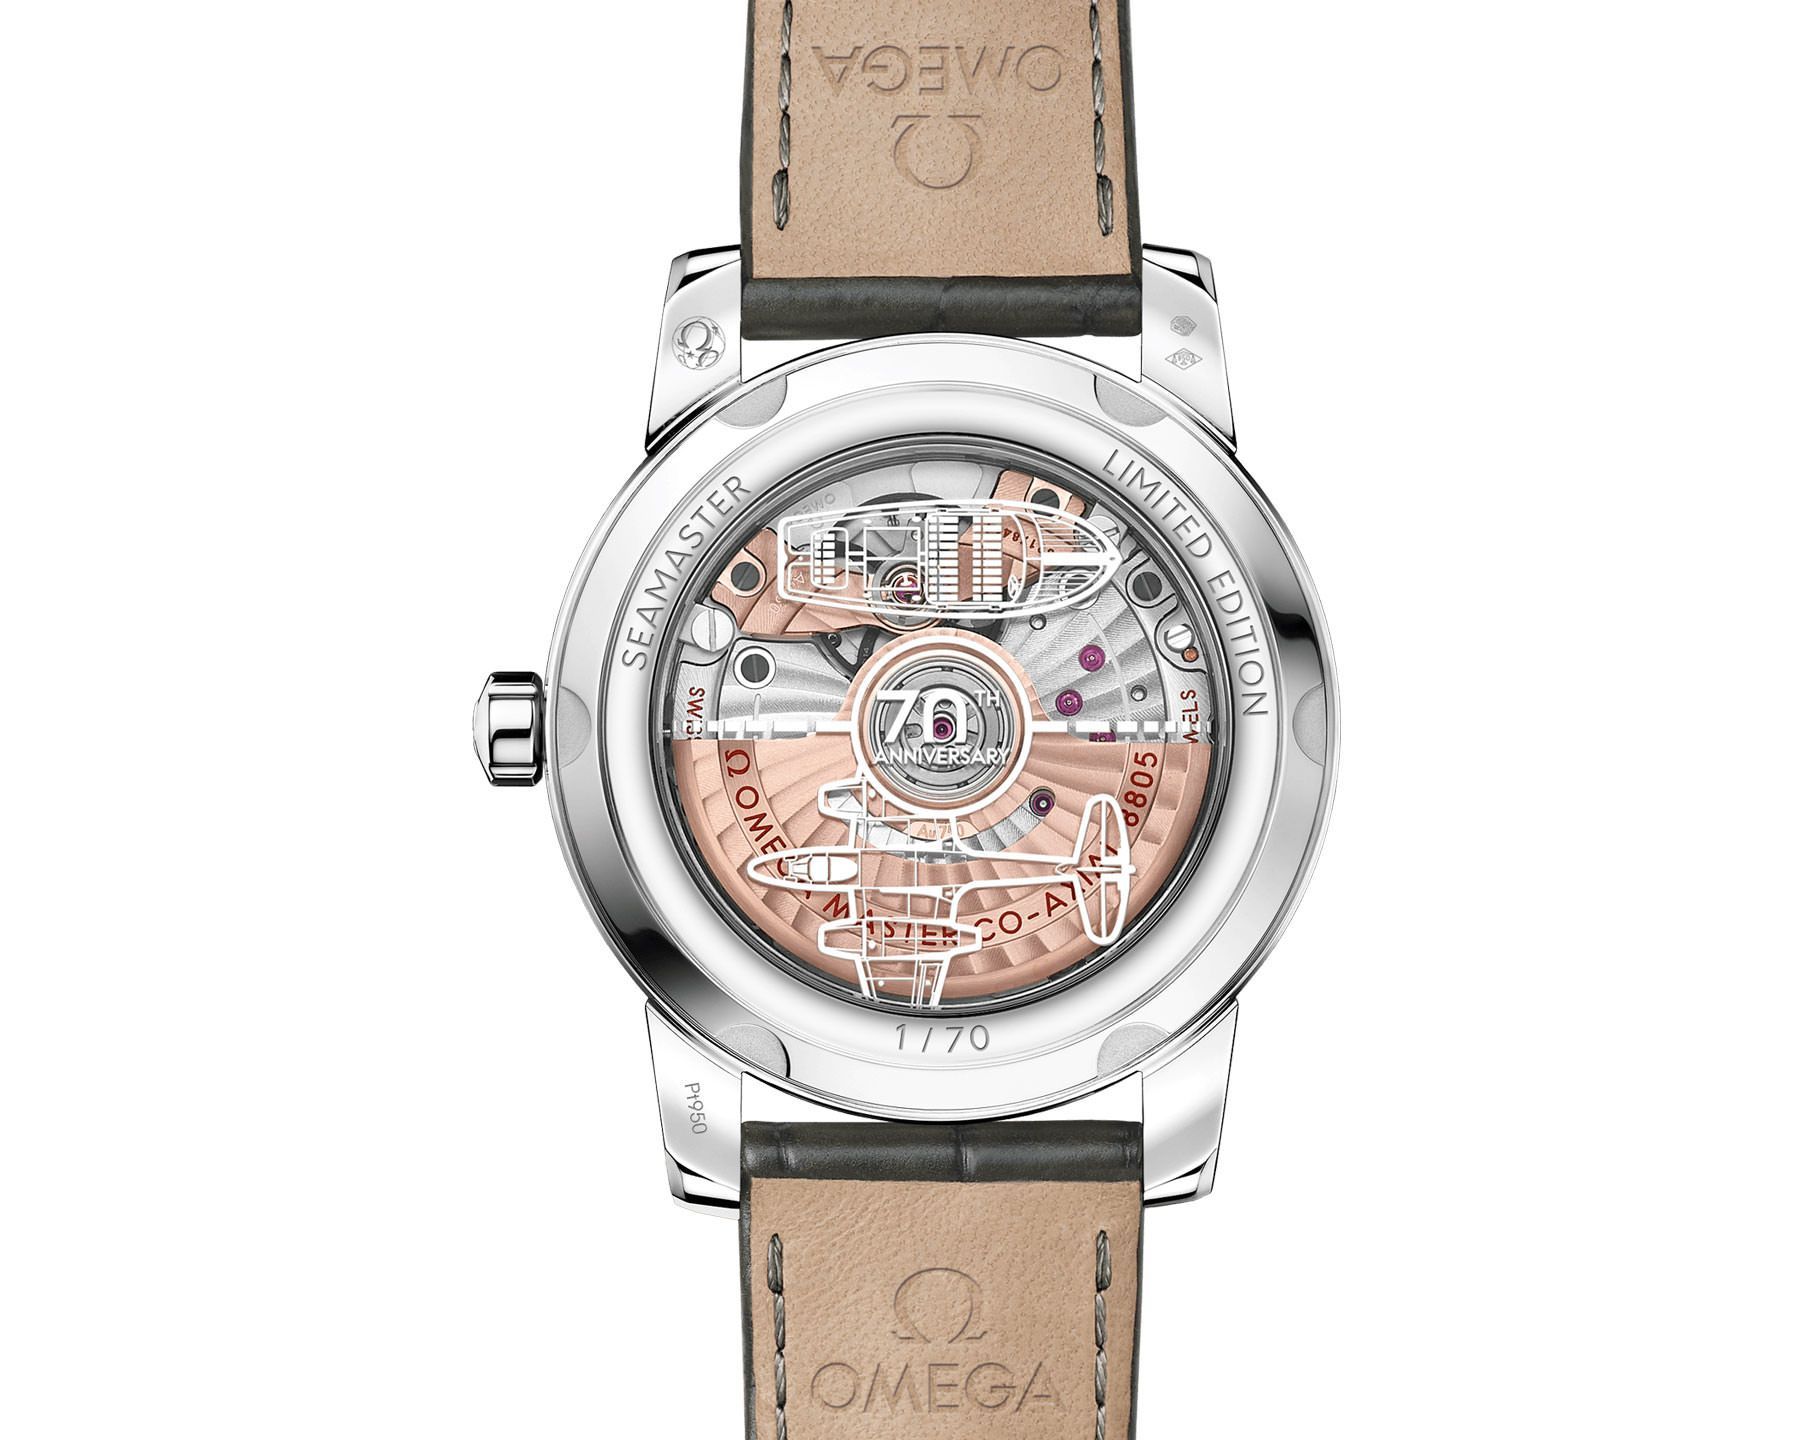 Omega Heritage Models 38 mm Watch in Grey Dial For Men - 5